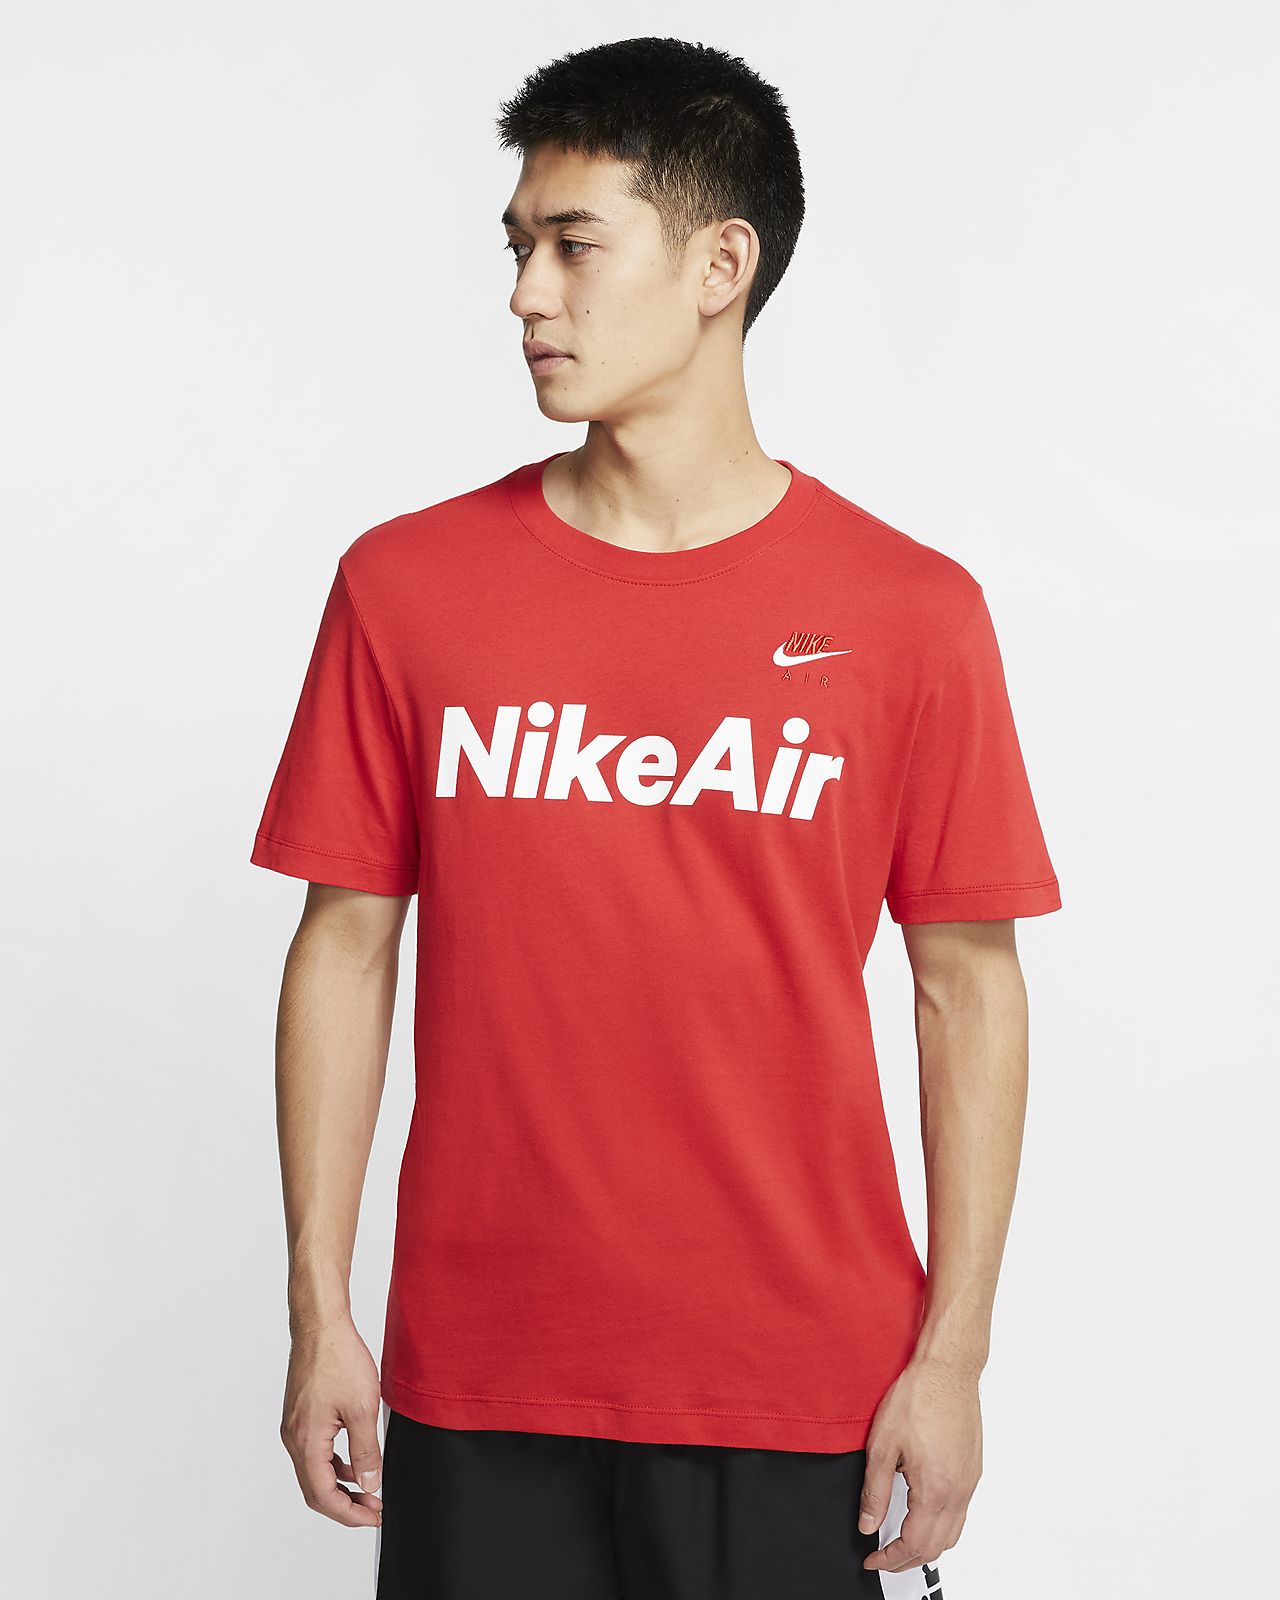 nike air shirt red Shop Clothing 